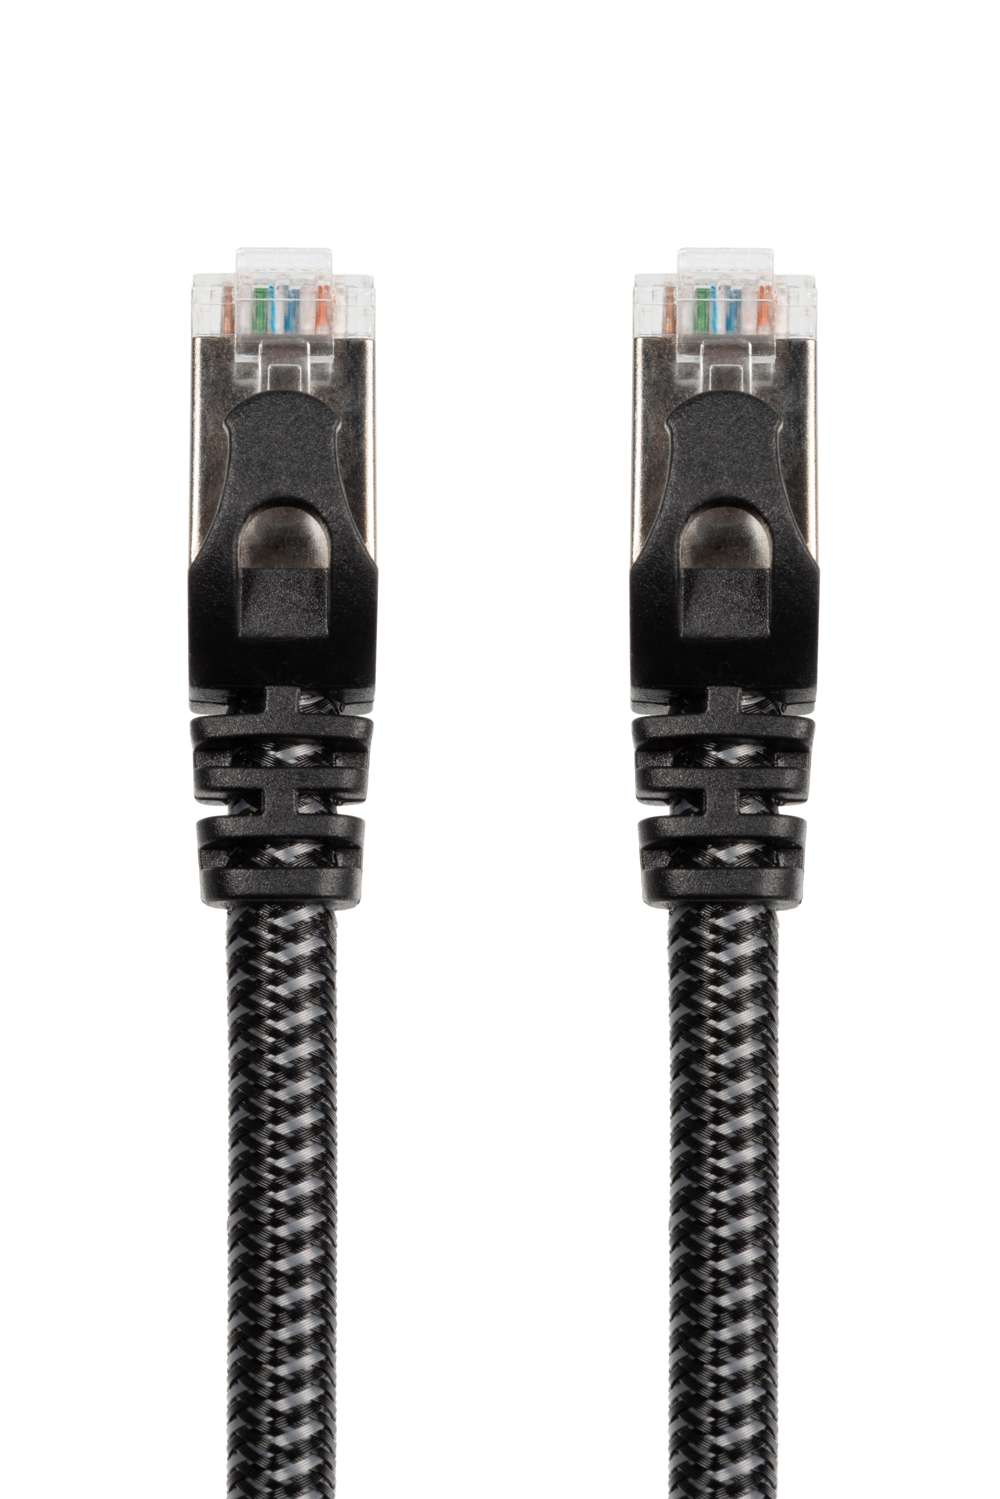 Original CAT6 FTP Ethernet Cable - 1.5 meter